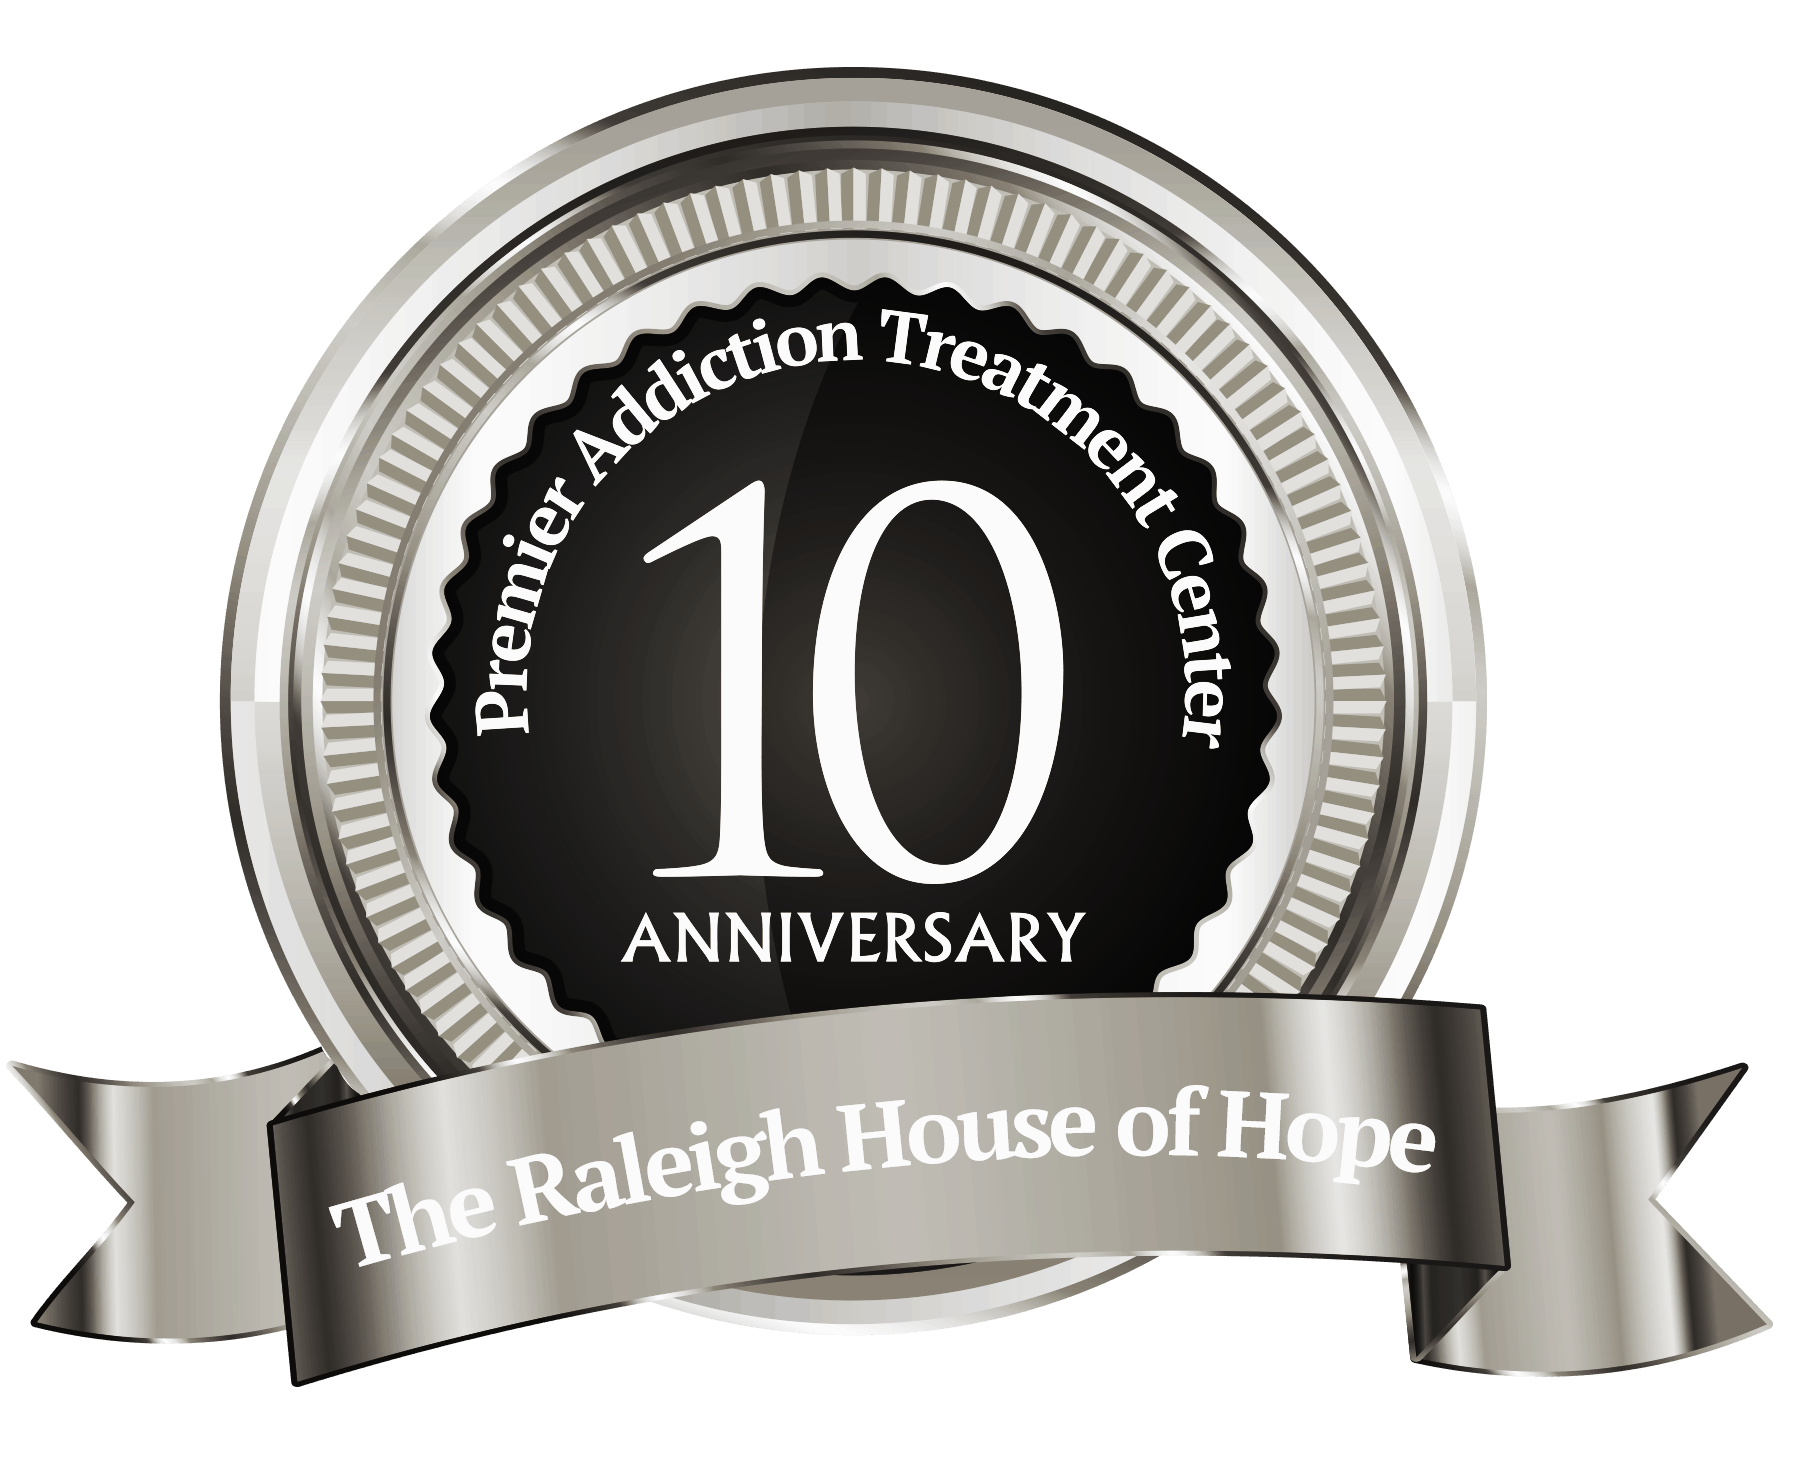 RHH 10 Year anniversary badge